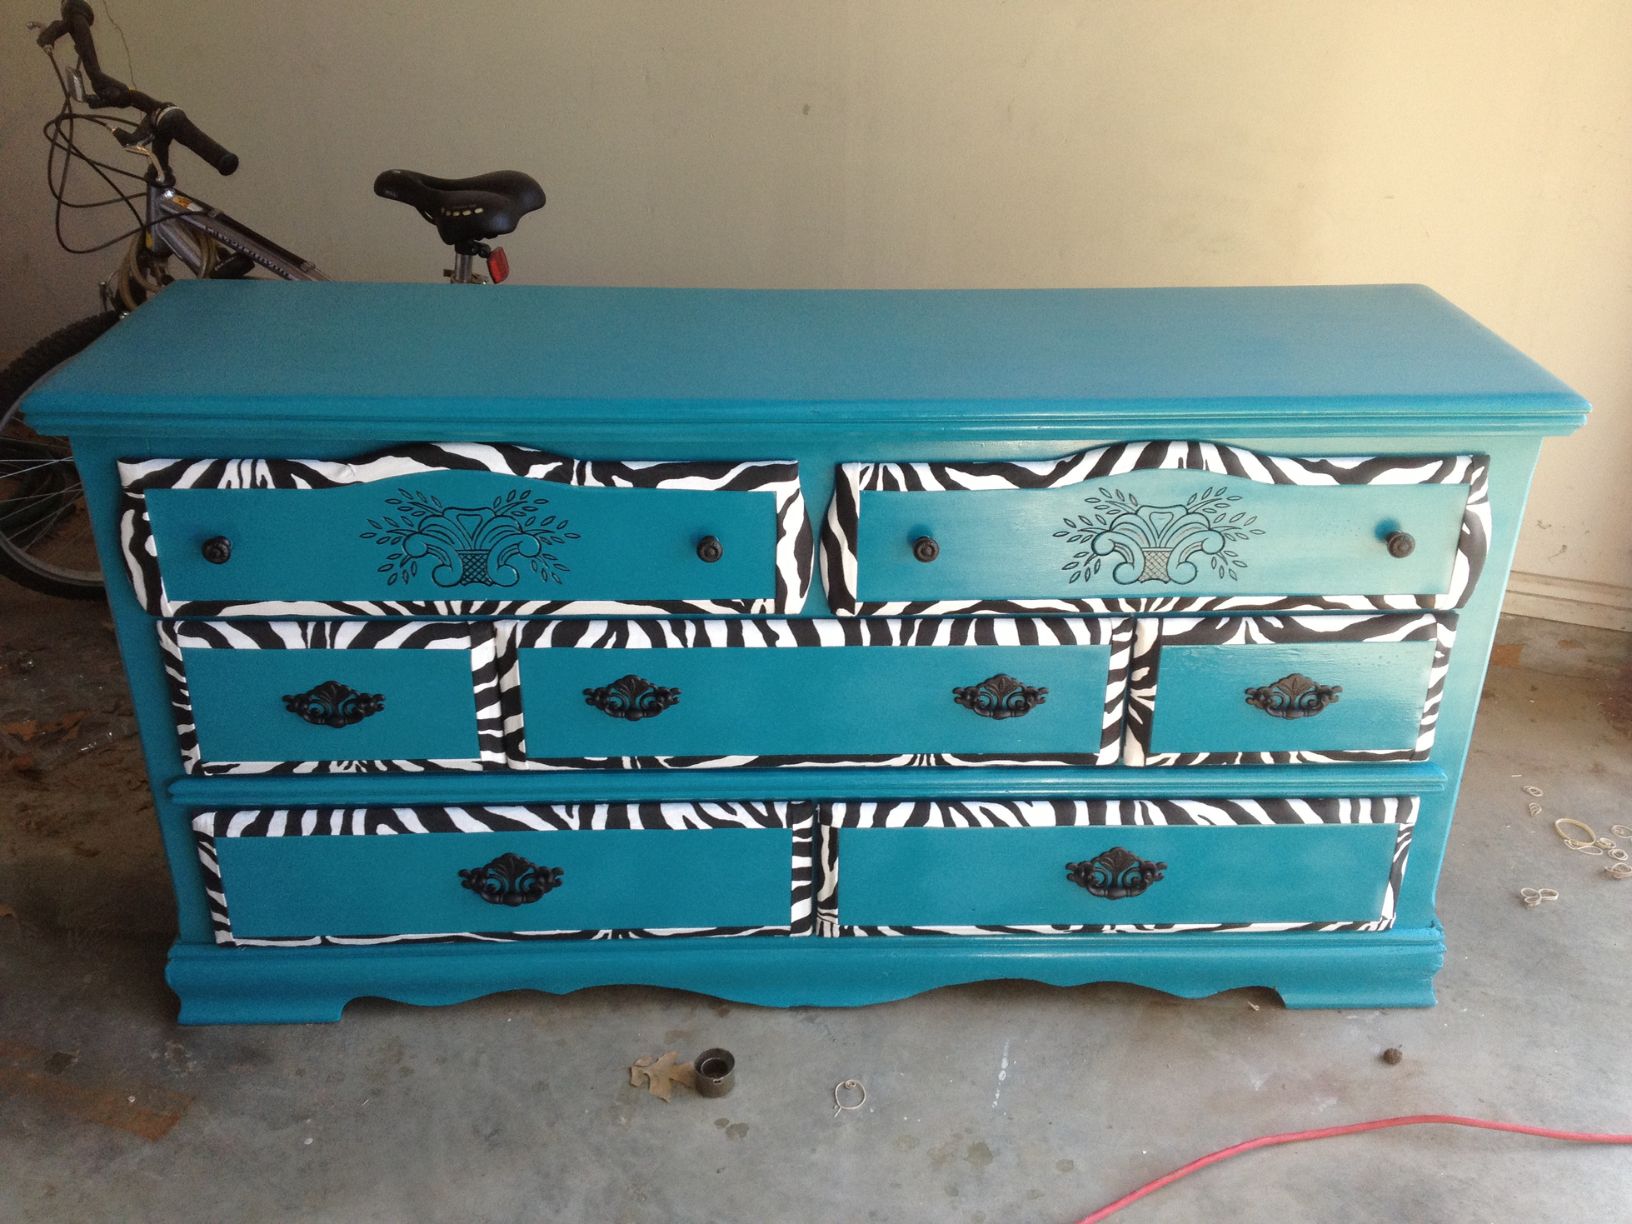 How To Paint Zebra Stripes On A Dresser